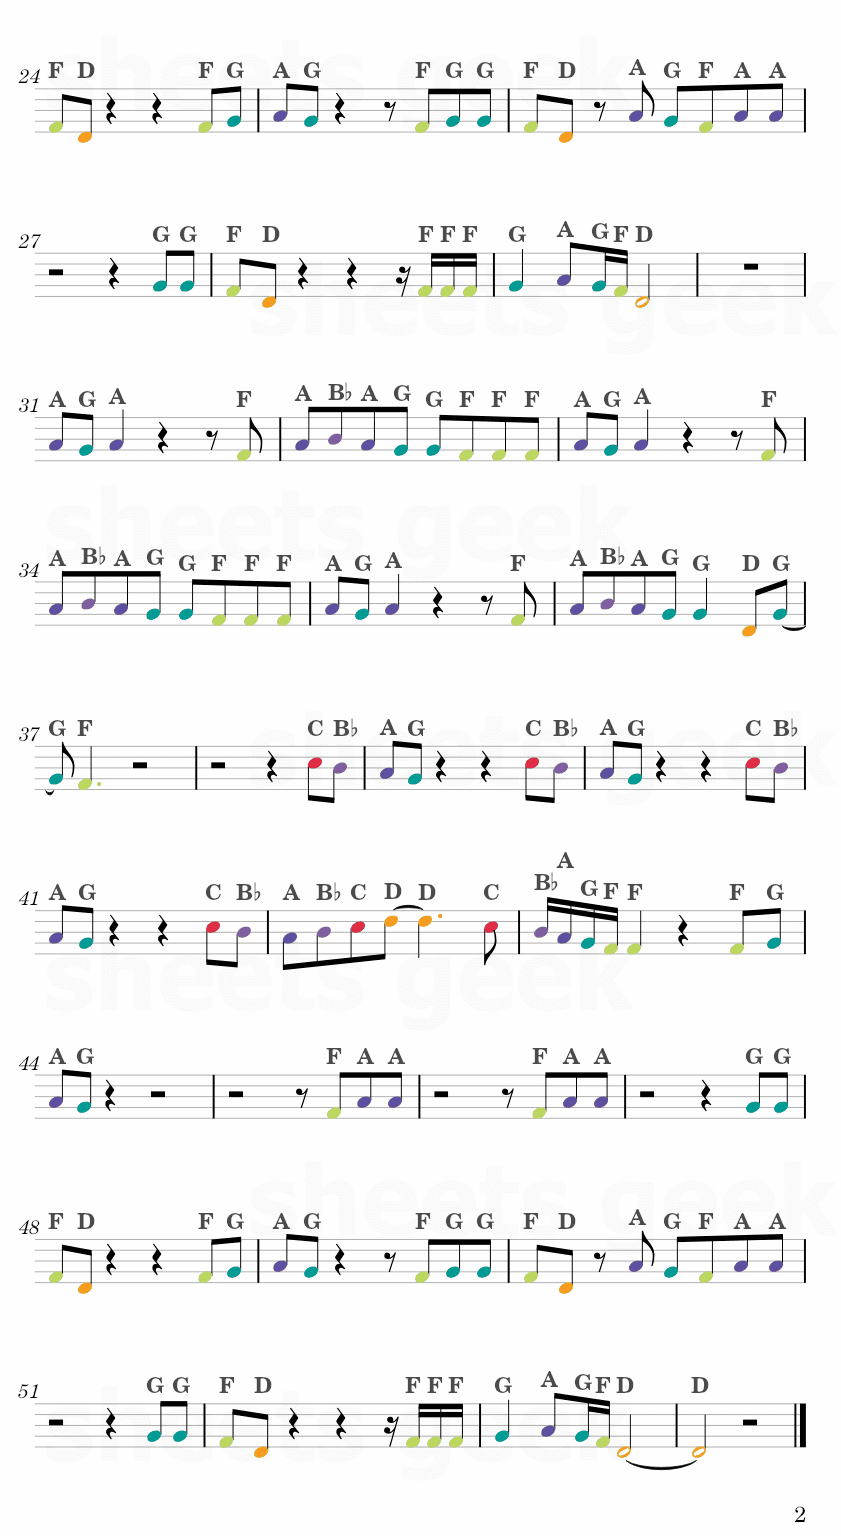 Redbone by Childish Gambino Easy Sheet Music Free for piano, keyboard, flute, violin, sax, cello page 2